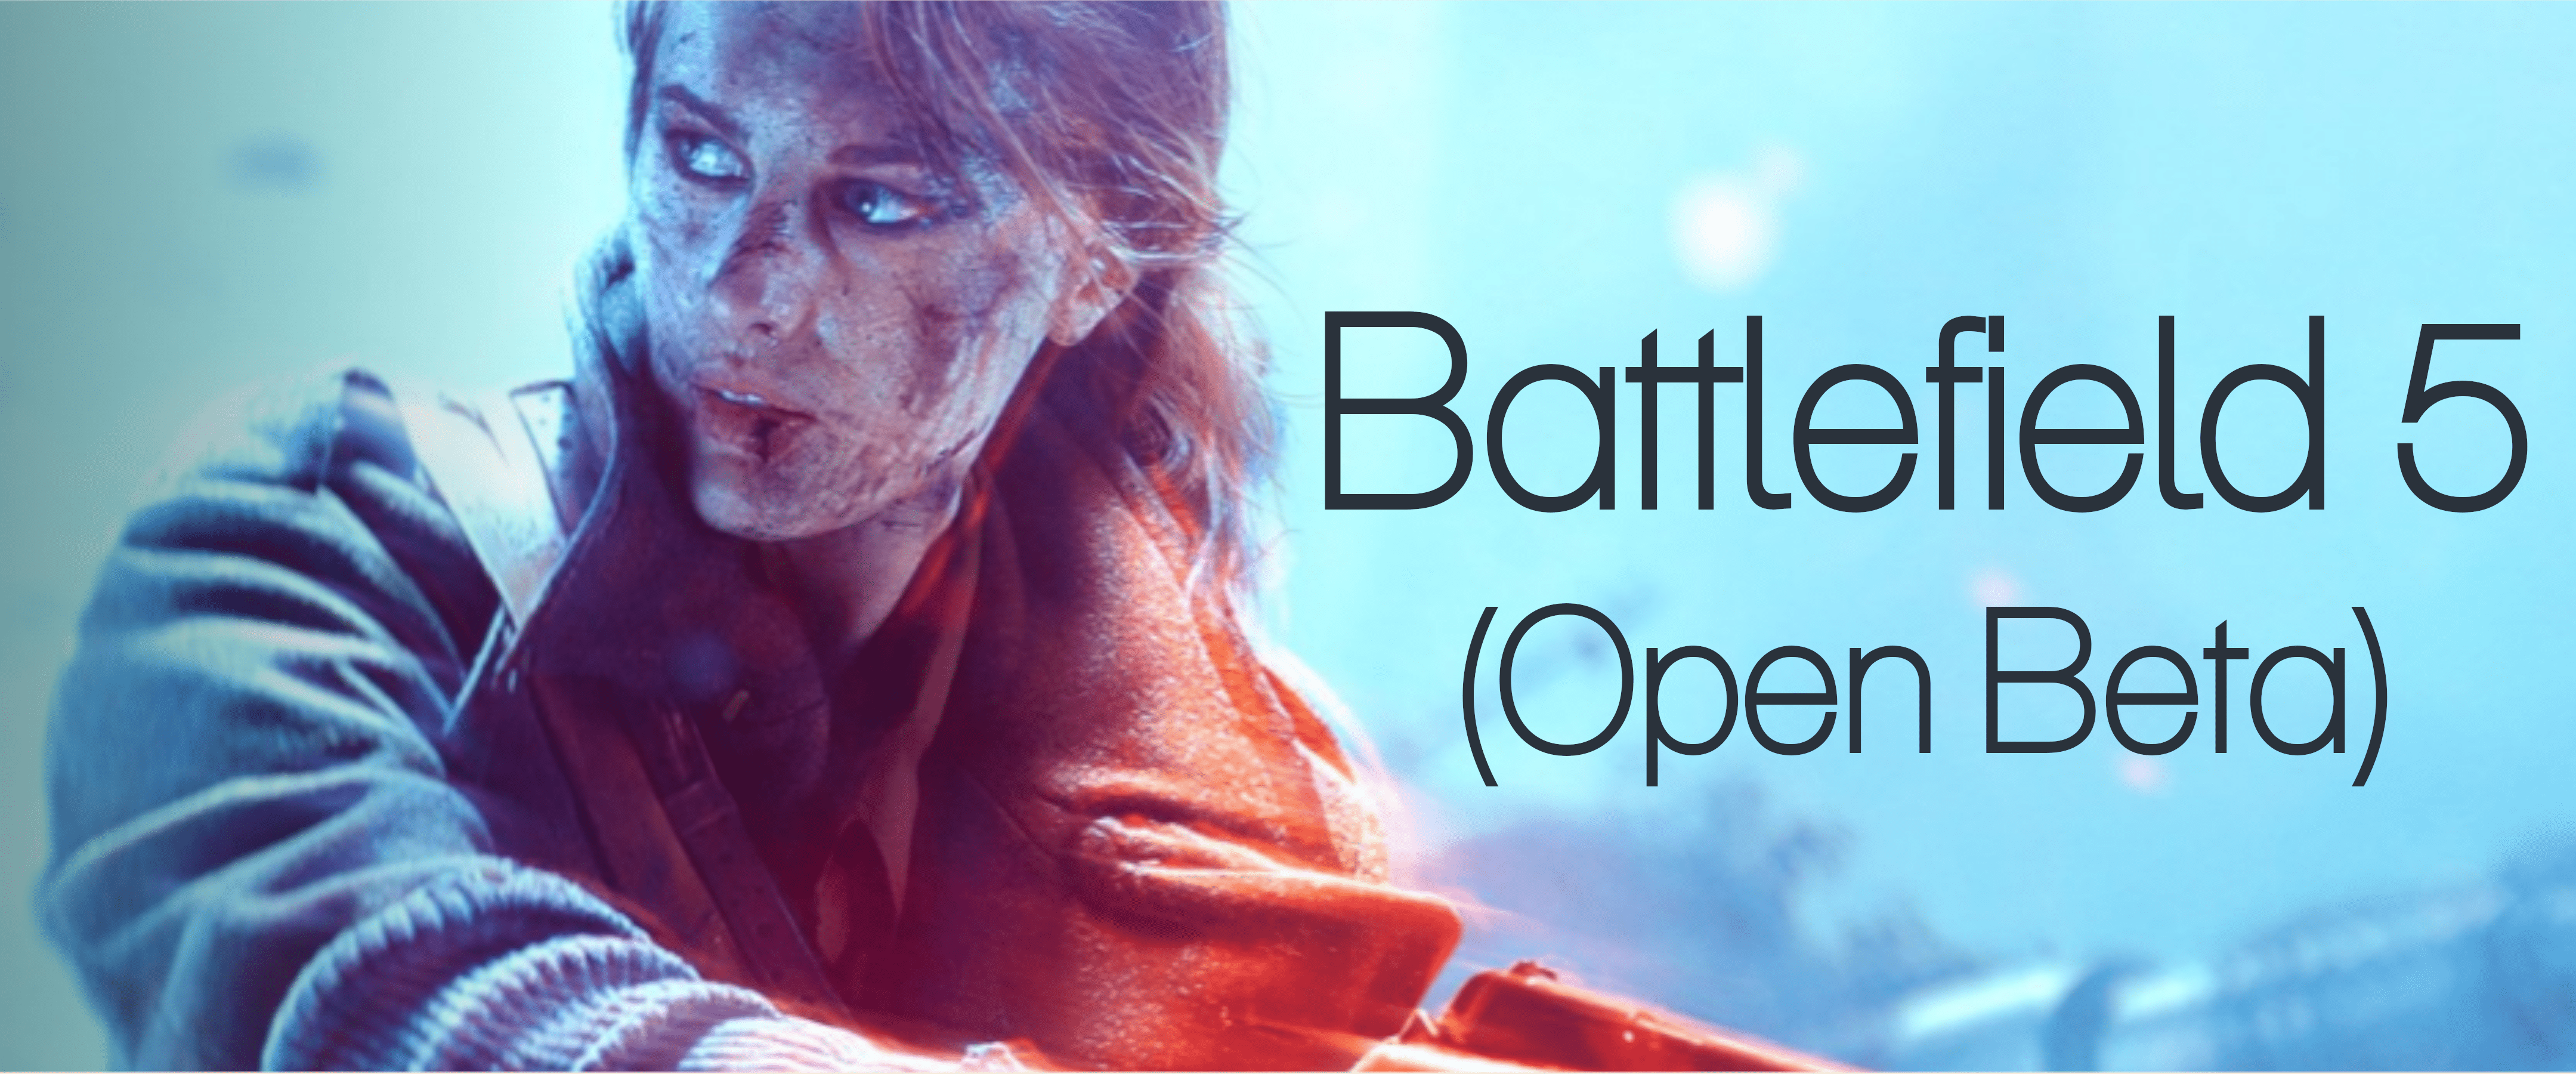 Battlefield 5 (Open Beta) 2